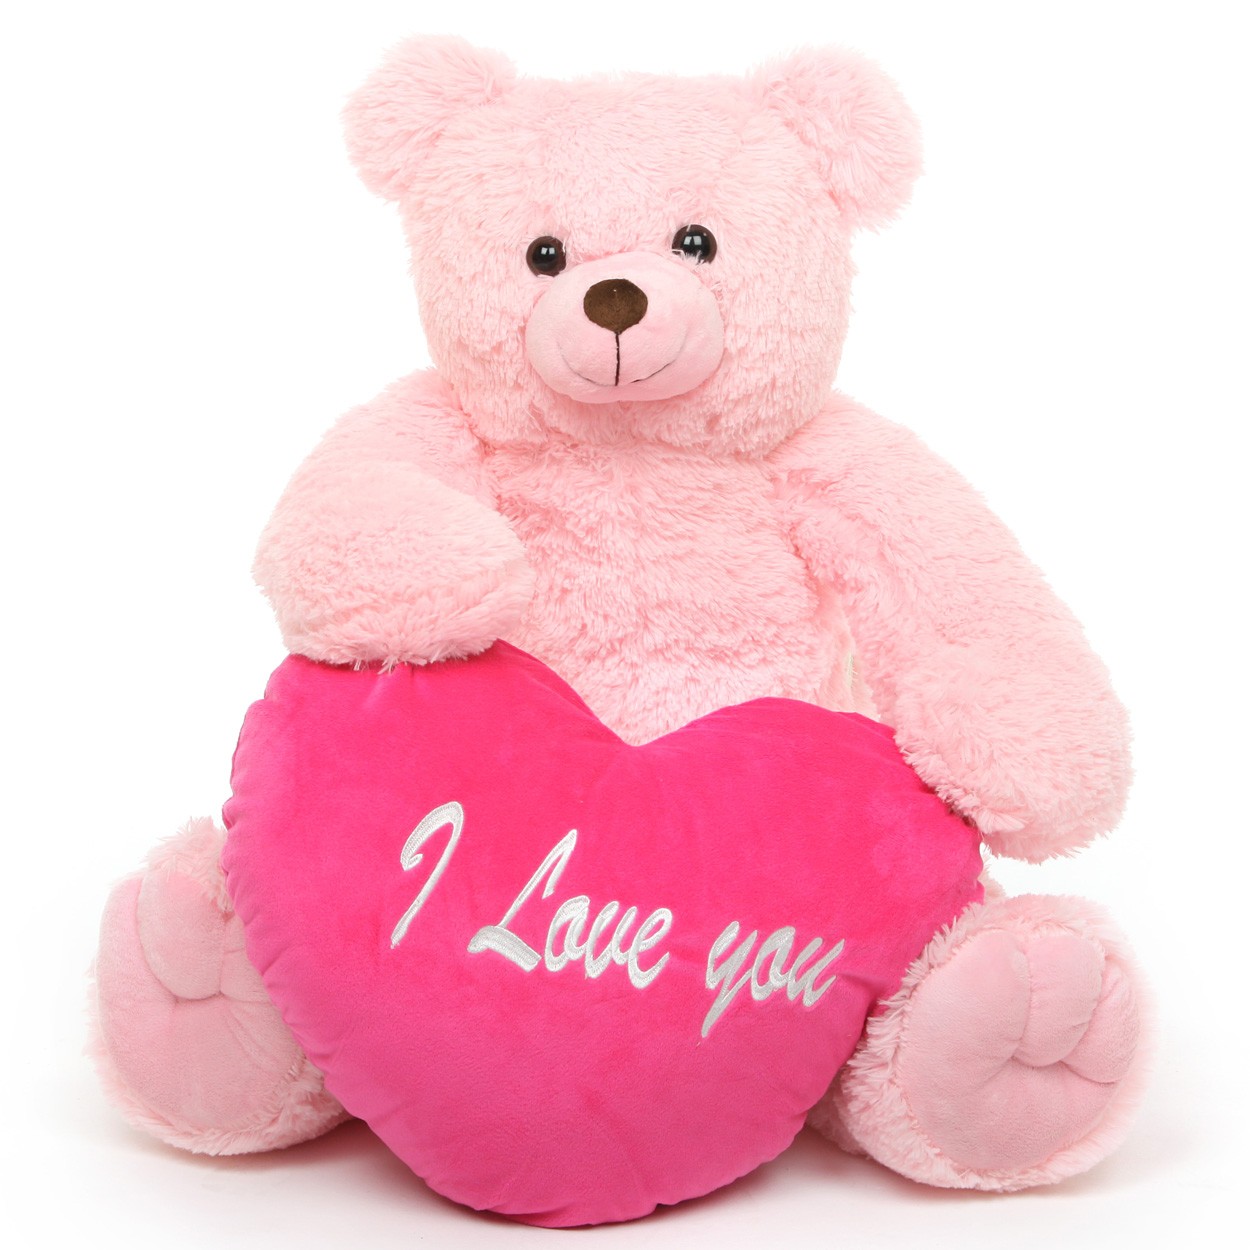 pink bear wallpaper,stuffed toy,teddy bear,pink,toy,plush